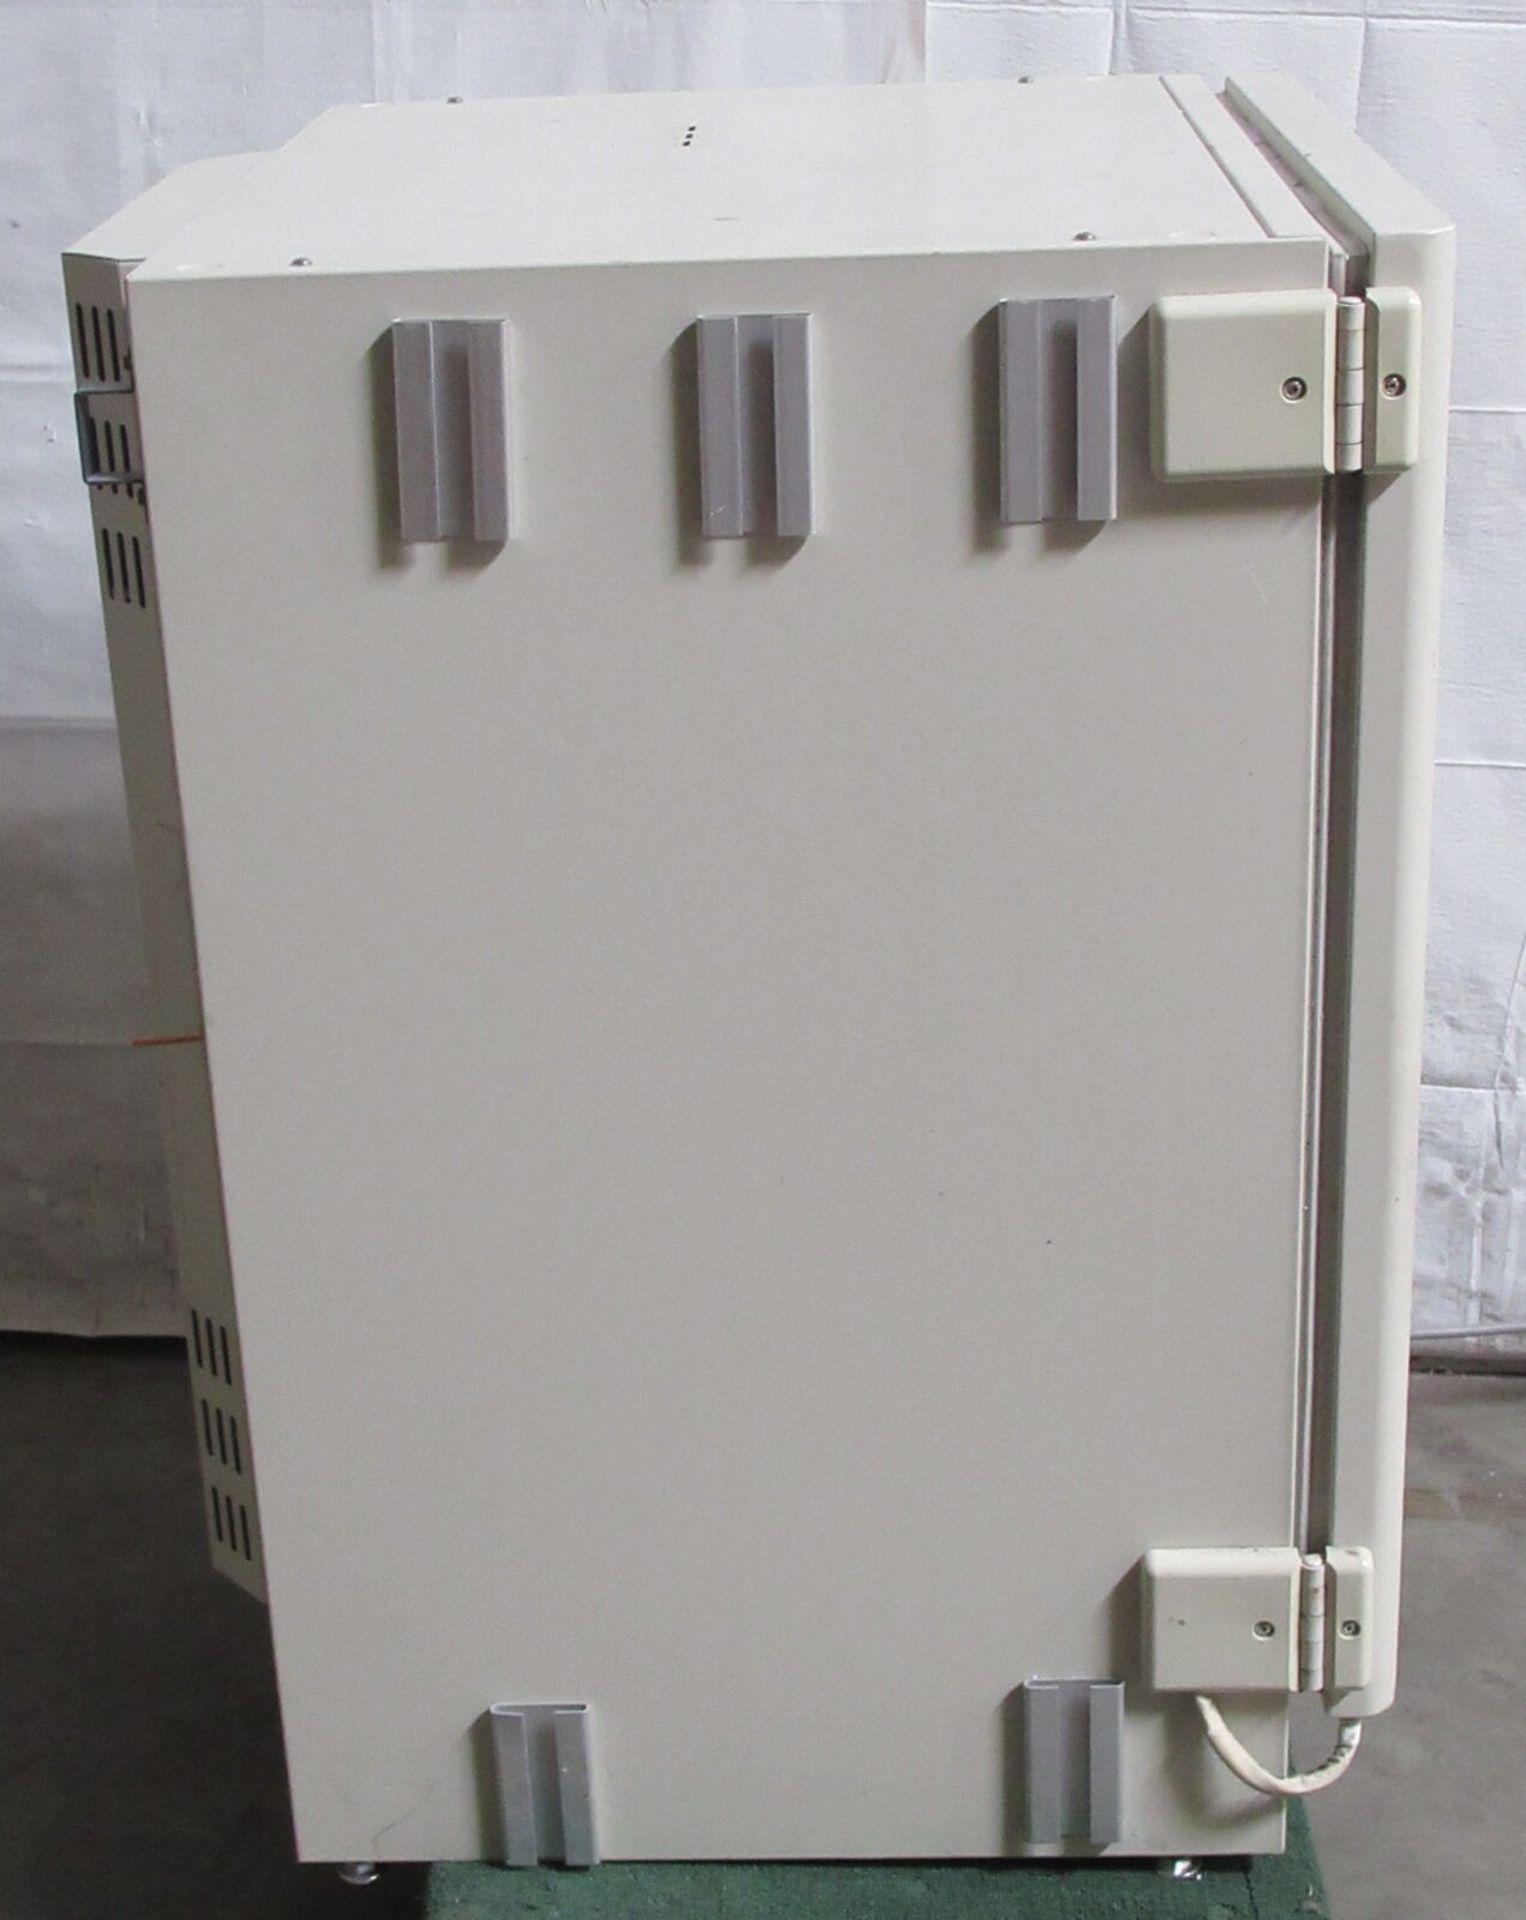 Sanyo MCO-17AIC CO2 Incubator 164L Capacity w/ 3 Shelves - Image 6 of 8